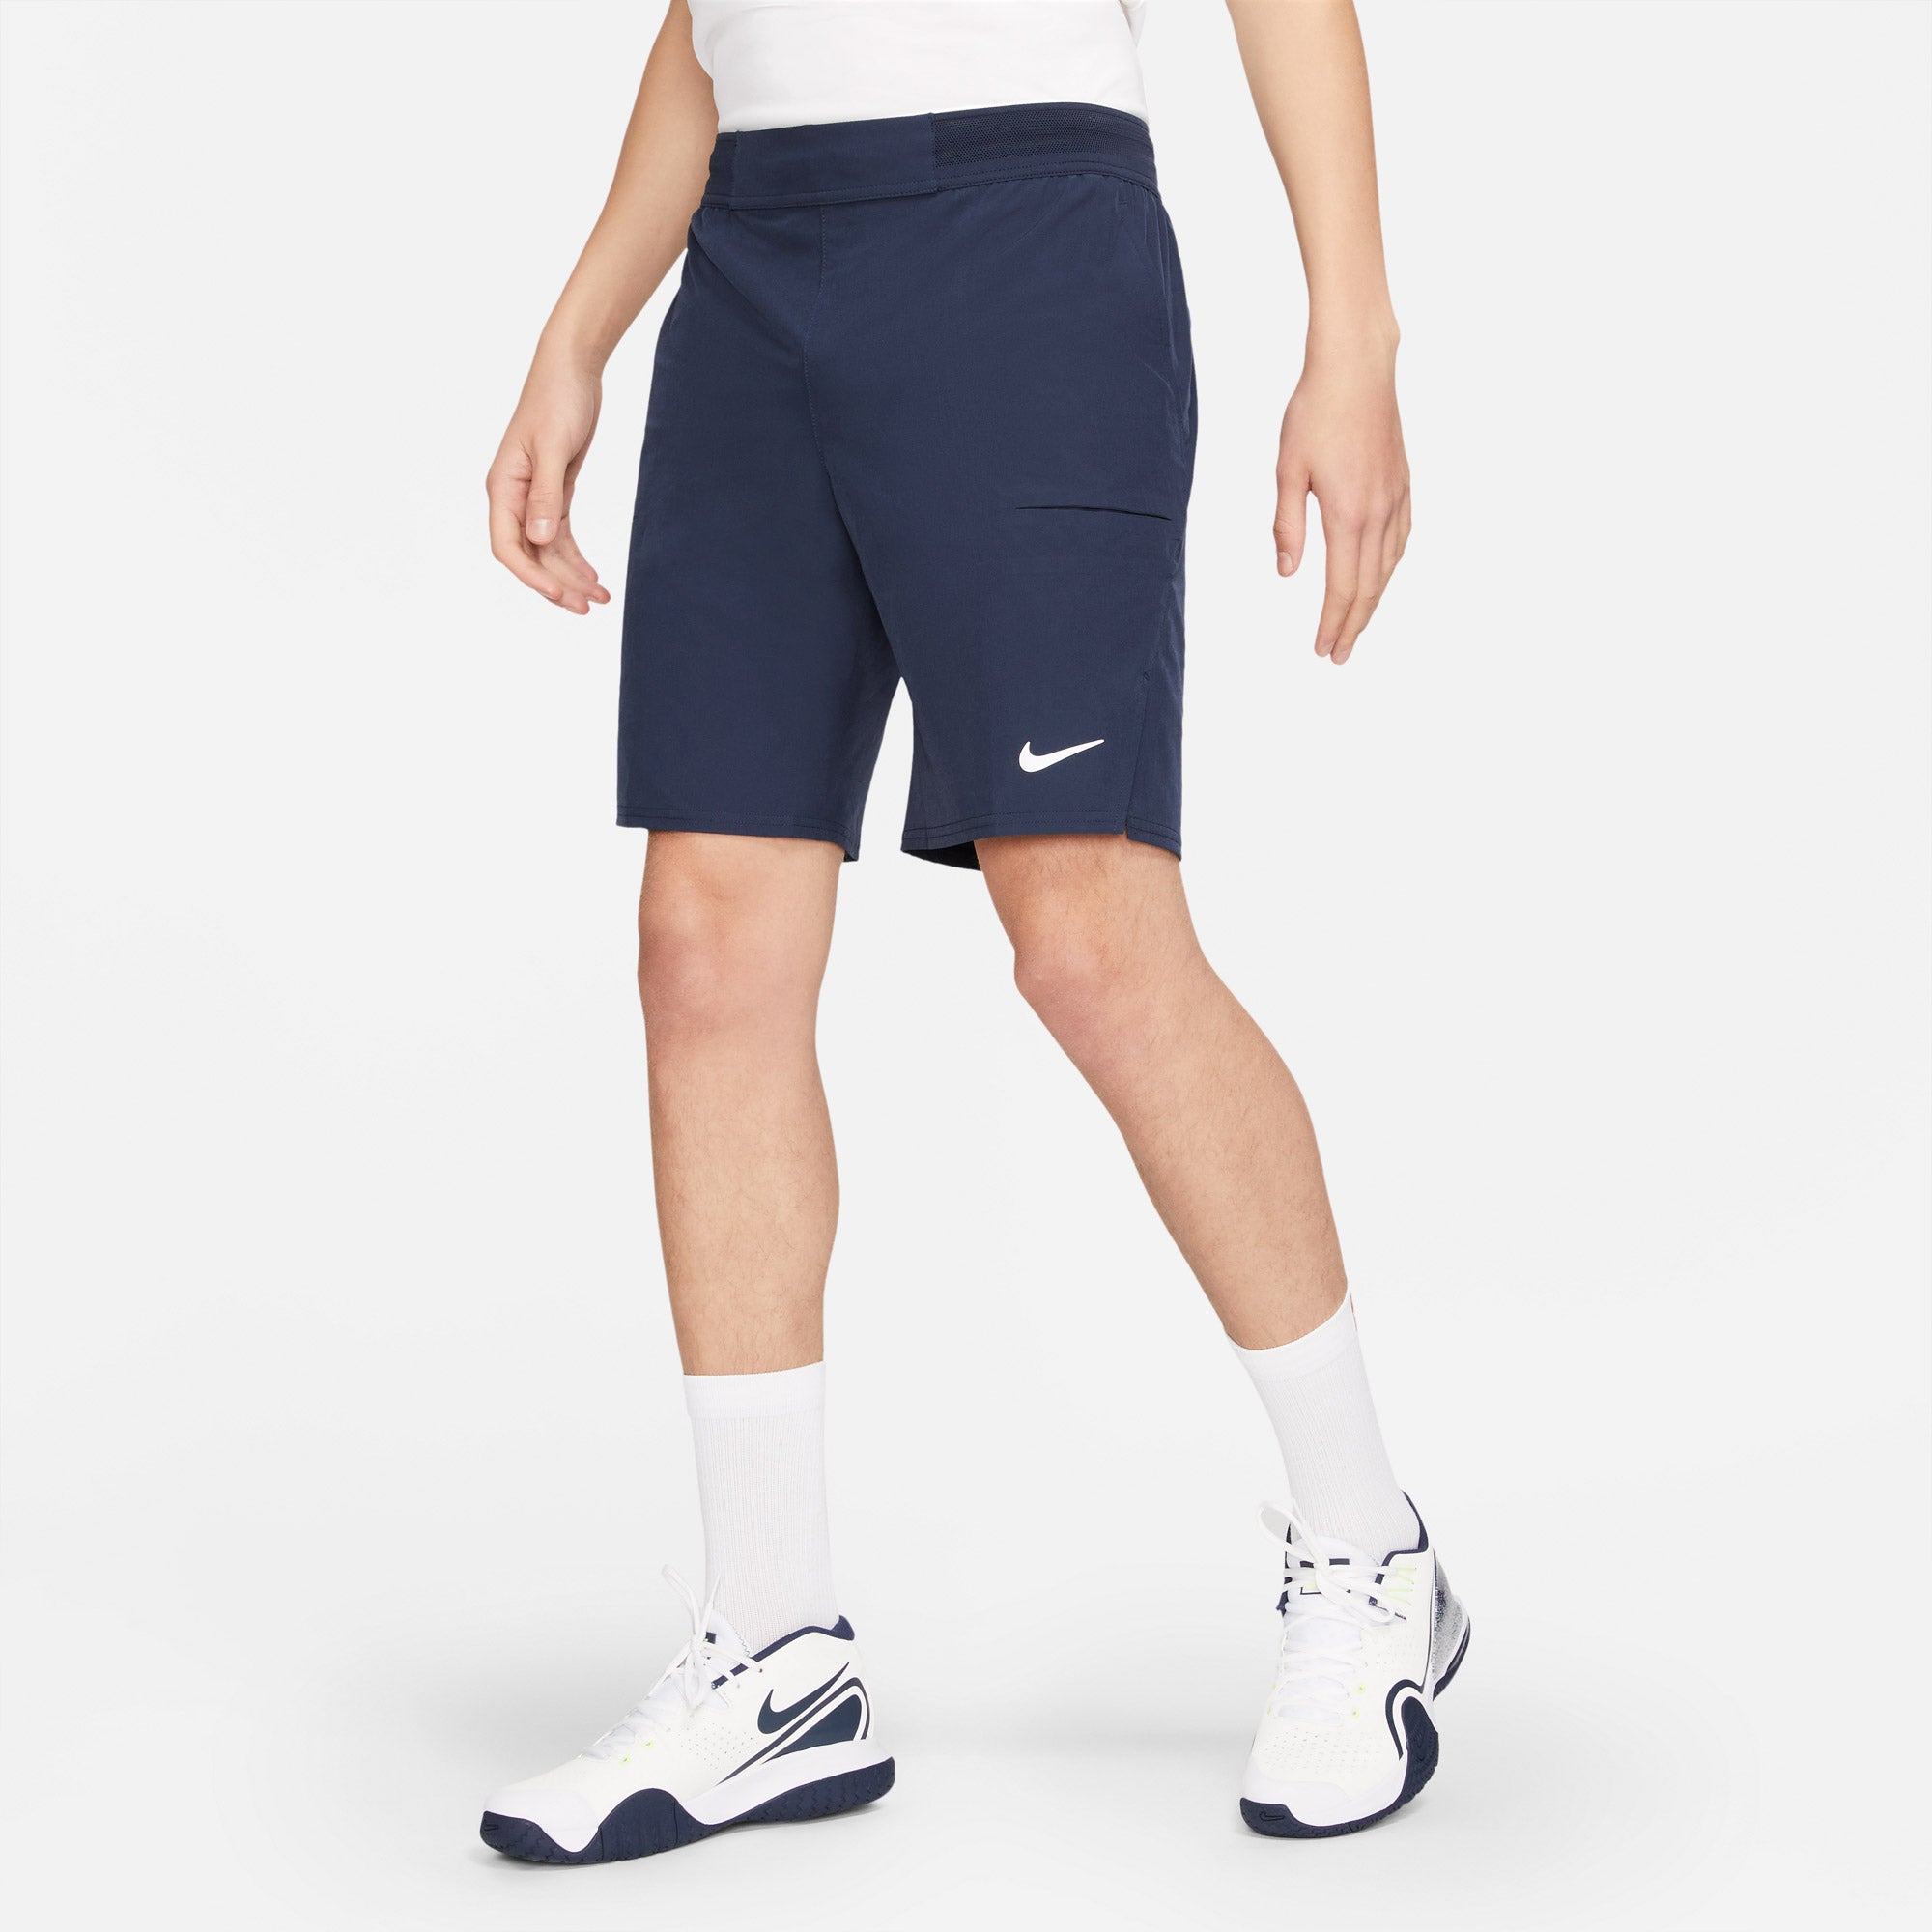 Nike Flex Advantage Men's 9-Inch Tennis Shorts Blue (1)